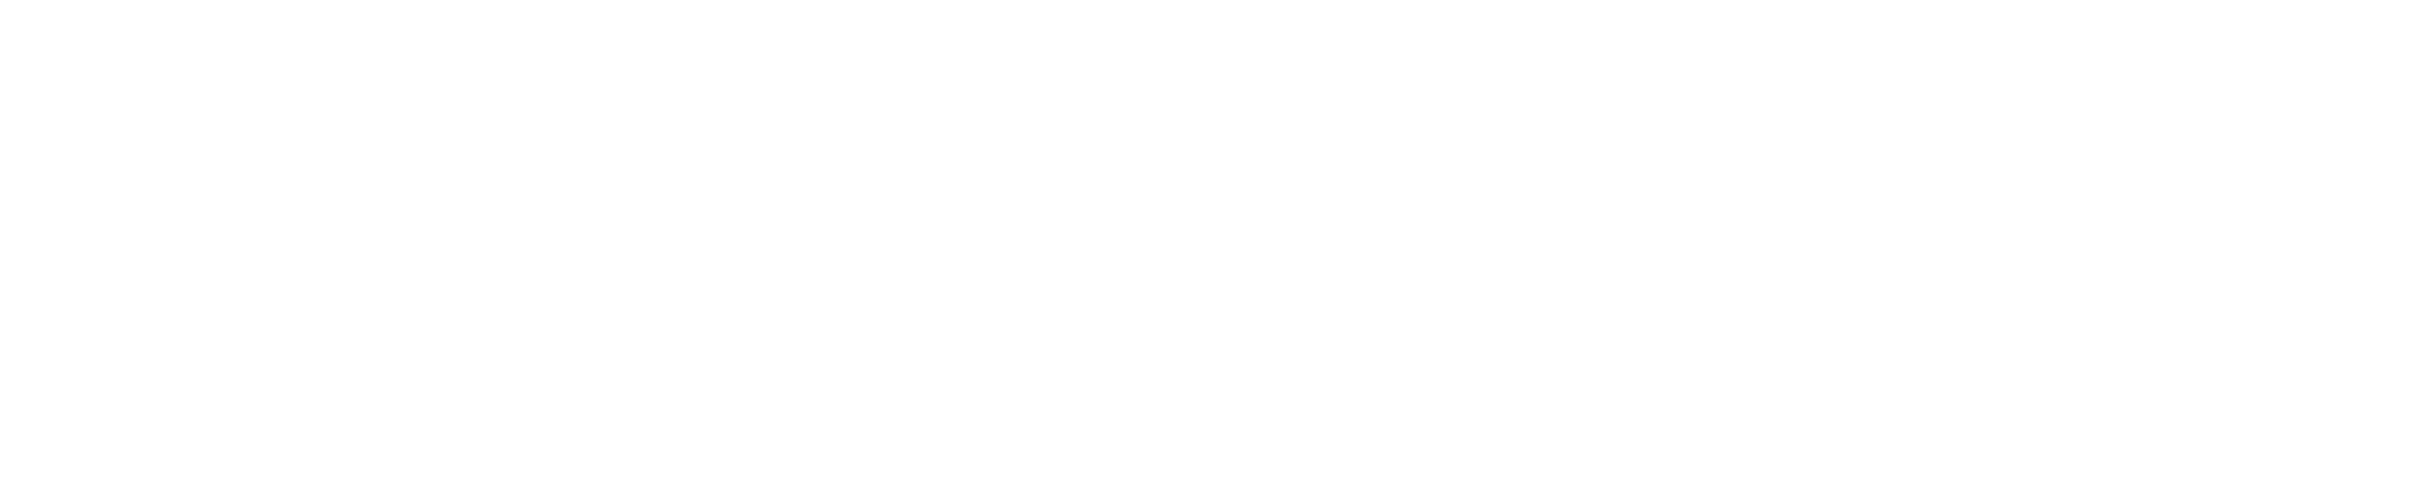 Höpöhöpö_logo_white